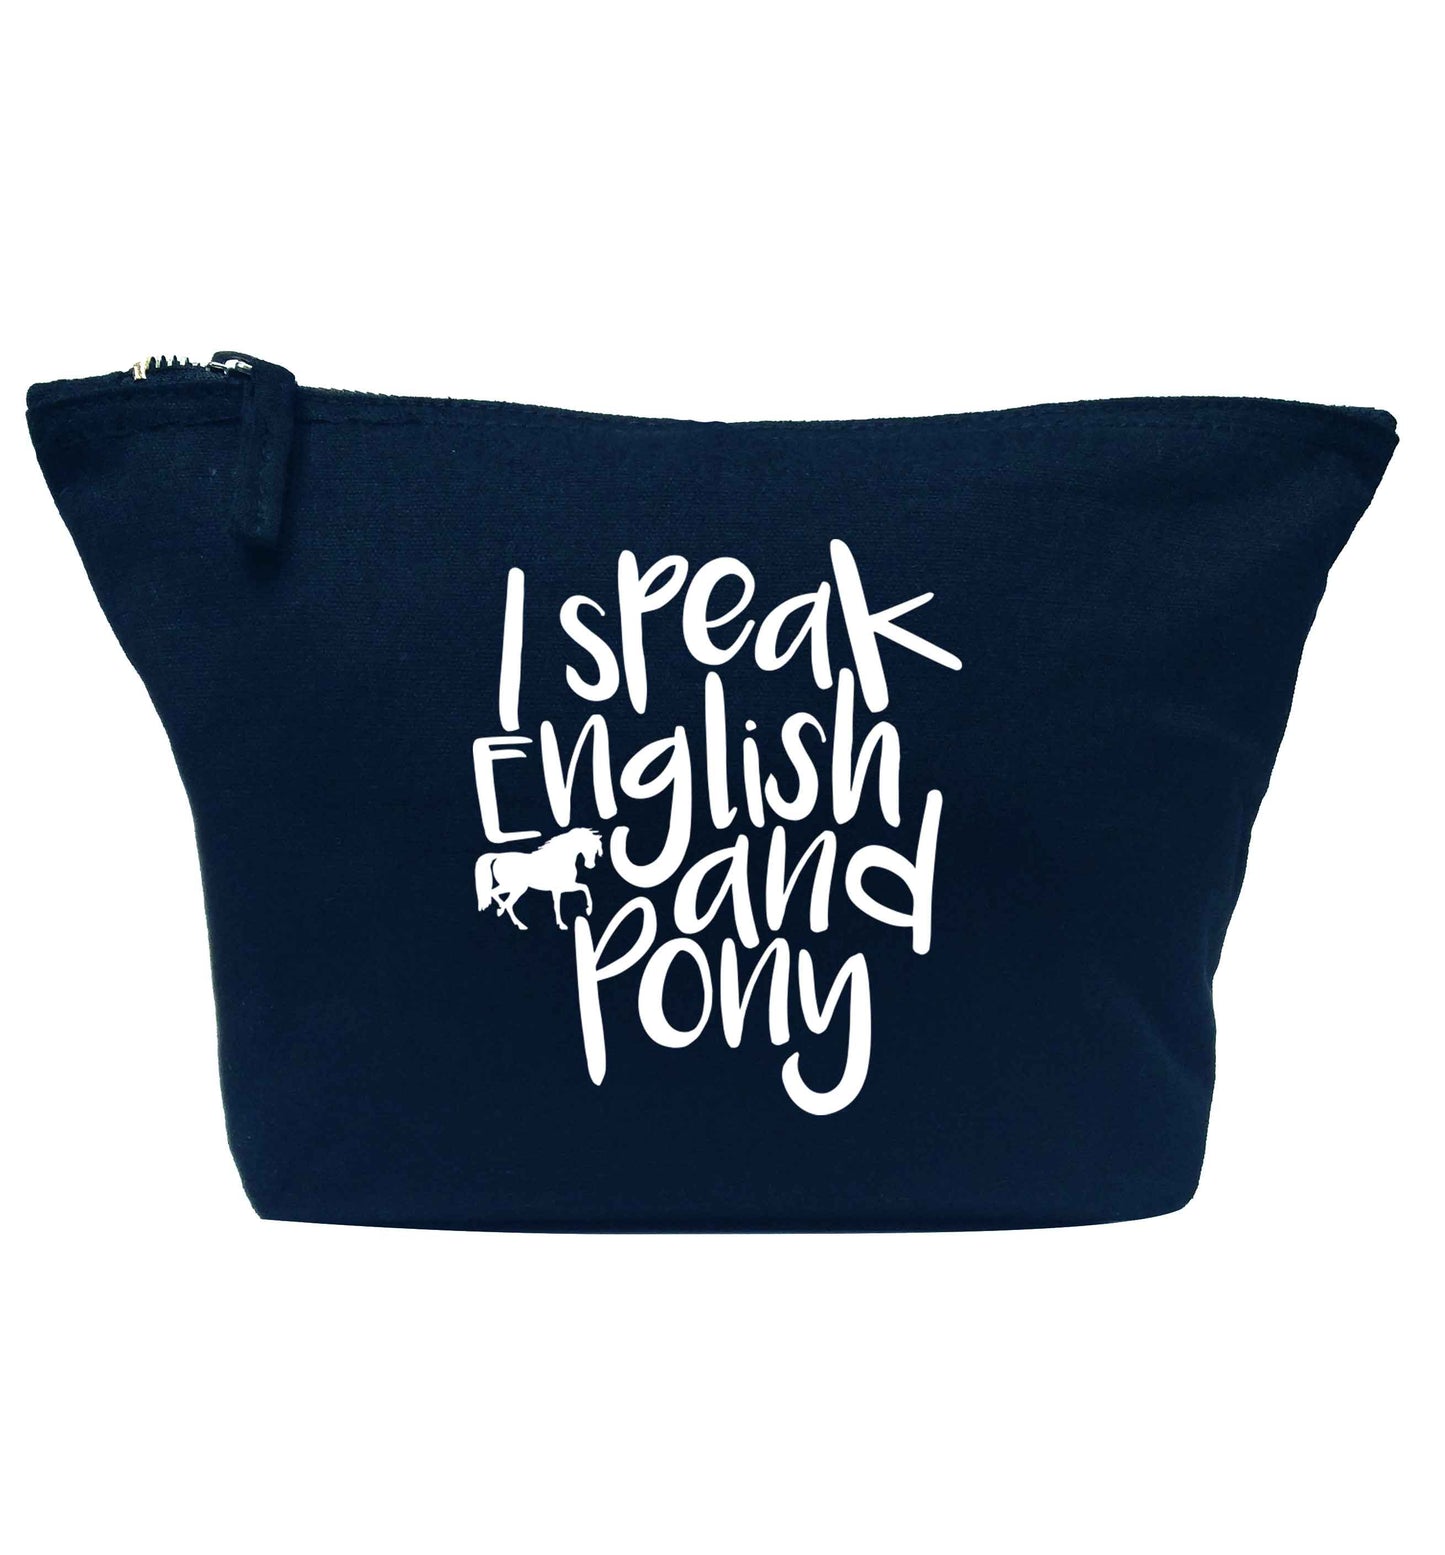 I speak English and pony navy makeup bag